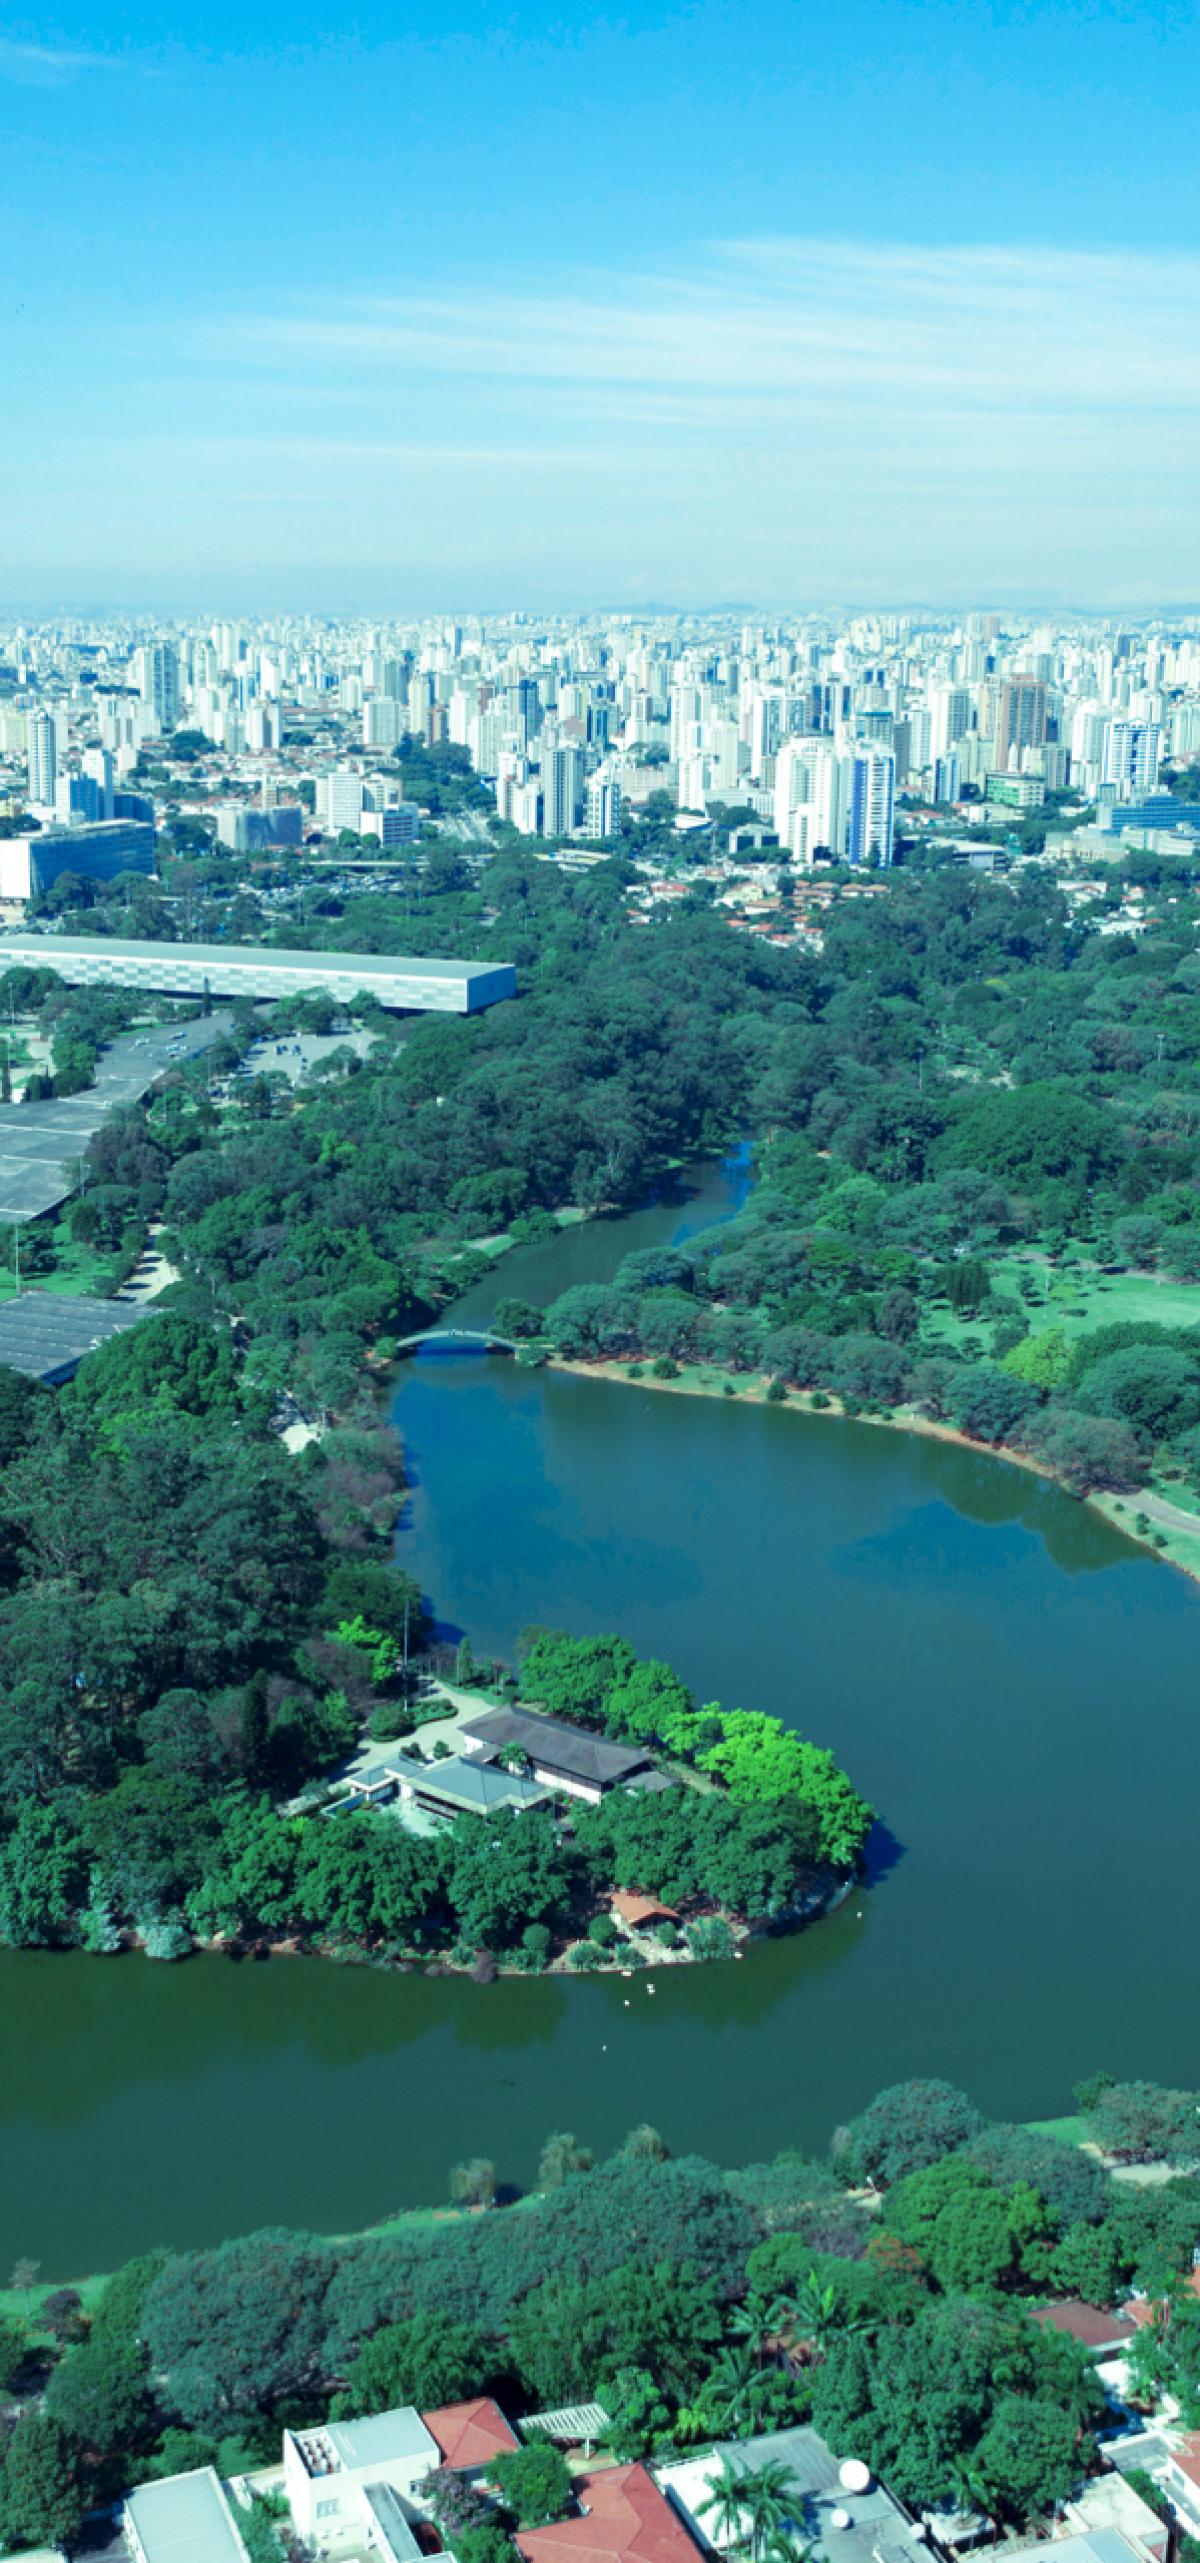 viastore in São Paulo